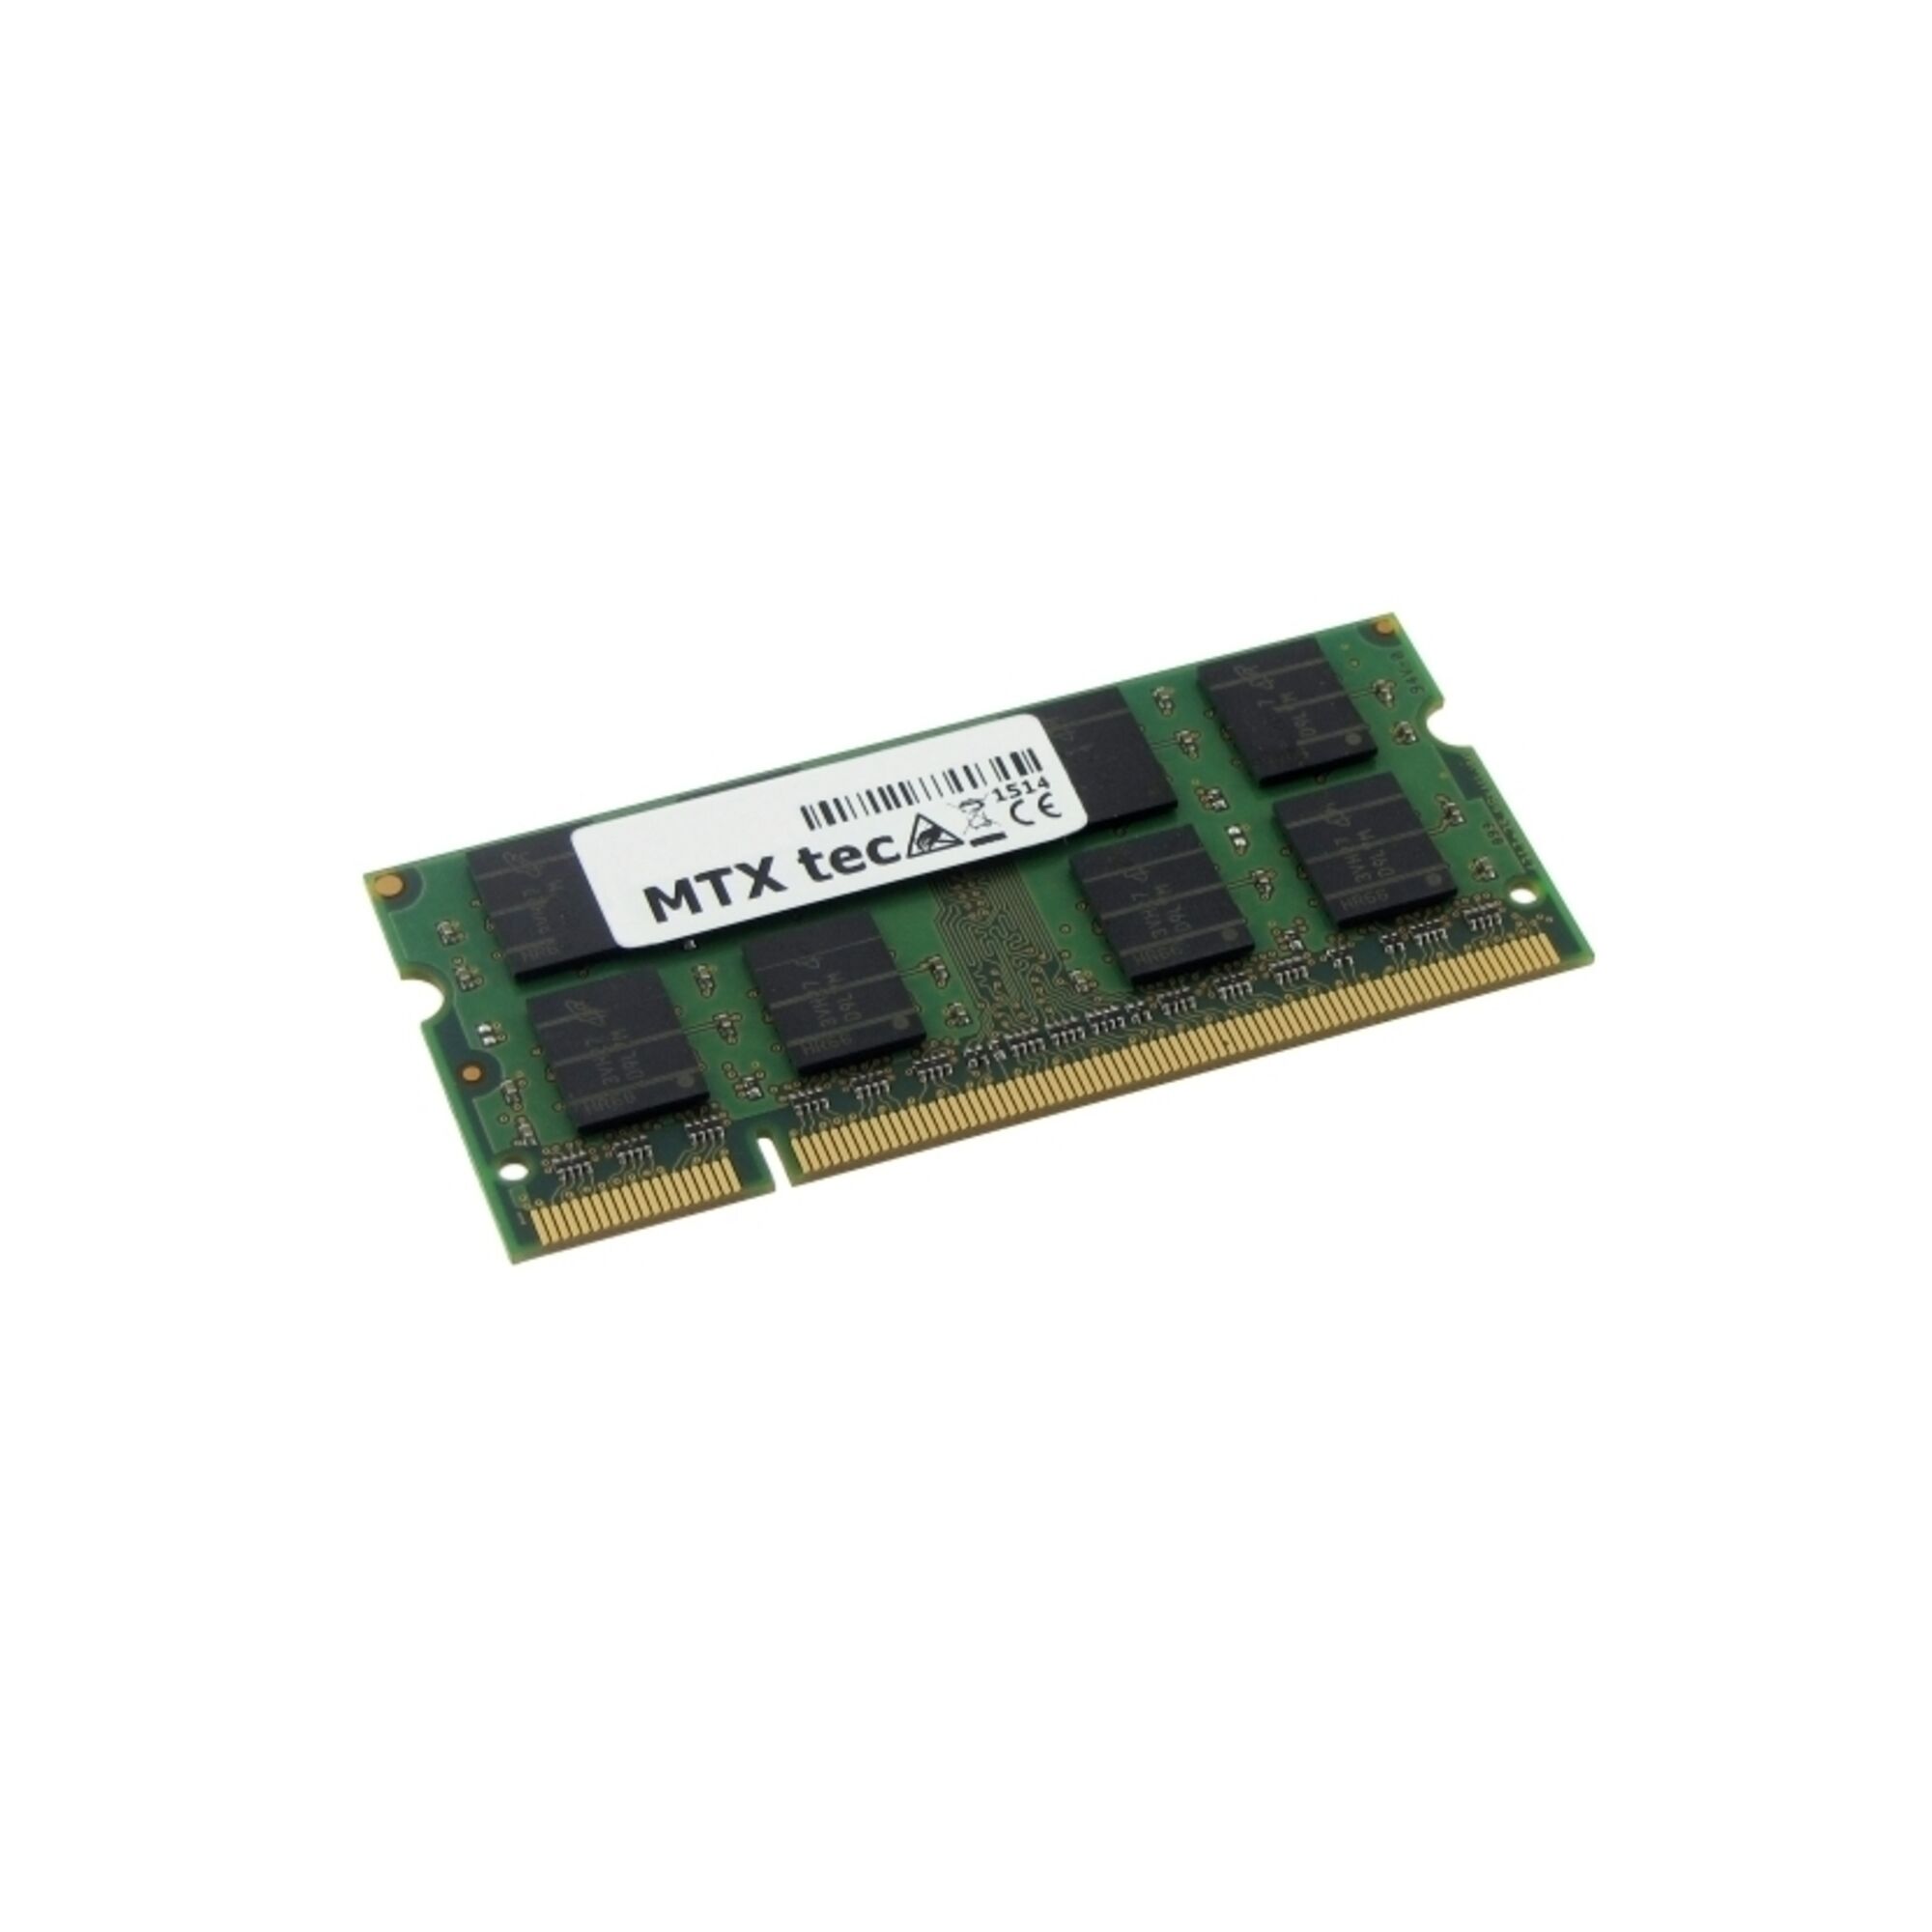 MTXtec 1GB, 1024MB Laptop Memory SODIMM DDR2 PC2-5300, 667MHz, 200 Pin RAM Laptop Memory - Neuf